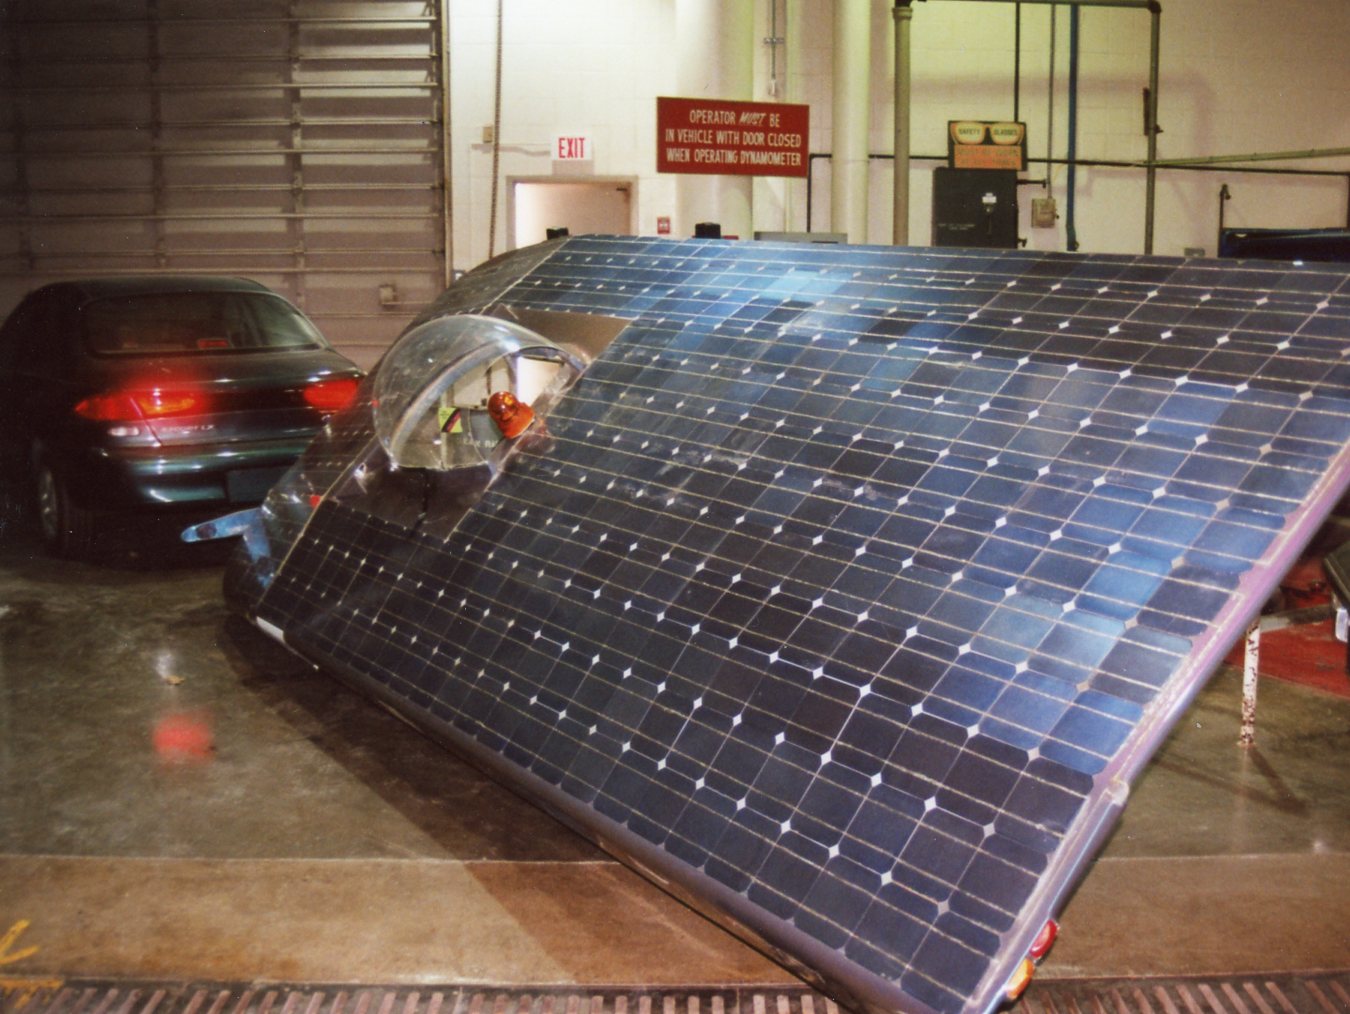 2001 – LLCC Solar Car (Prominence II) + Hydrogen Fuel Cell